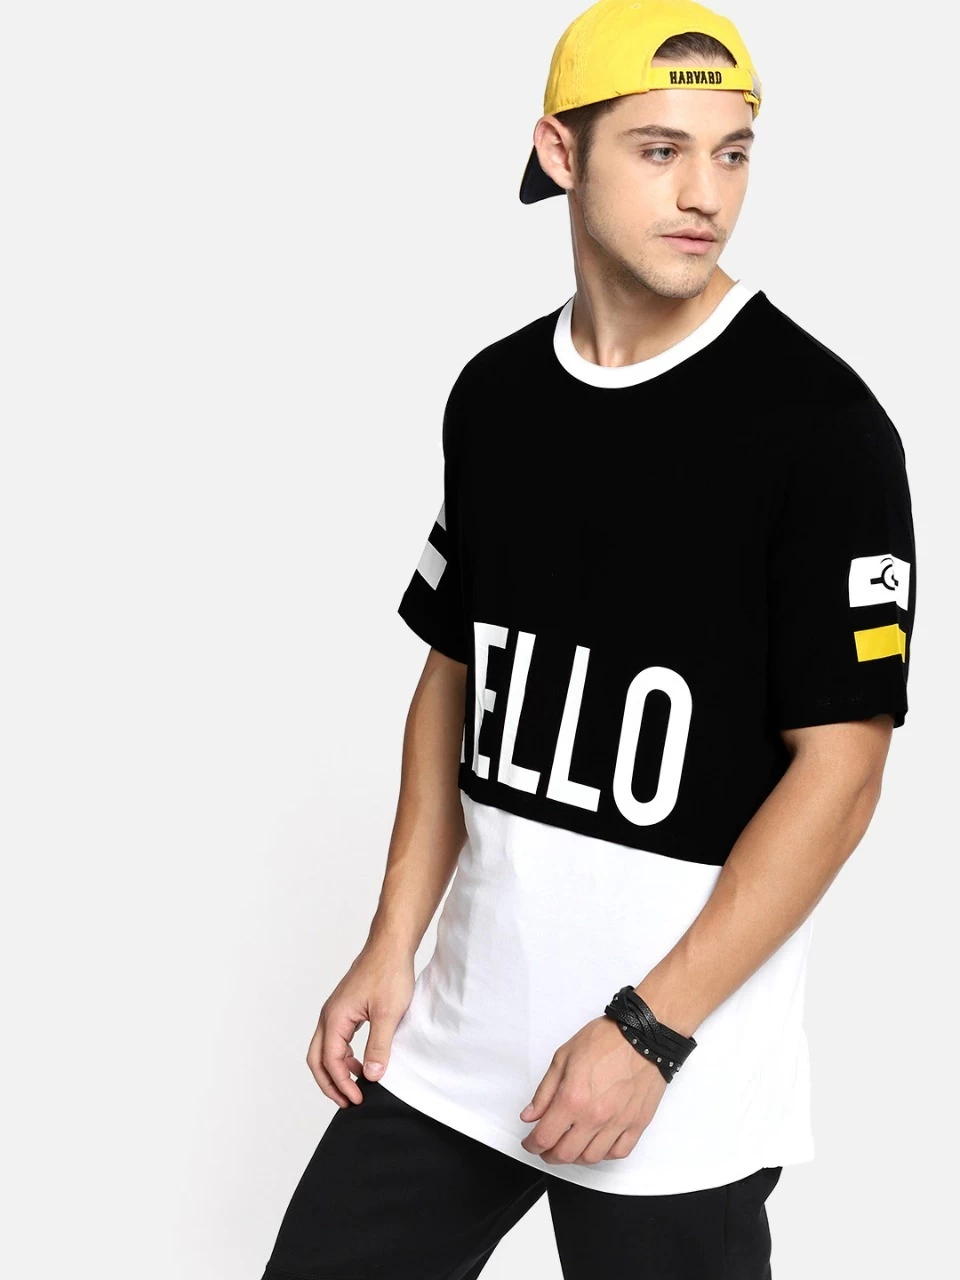 Men’s Stylish Design Half Sleeve Cotton Premium T-shirtMen’s Premium T-Shirt HB-12